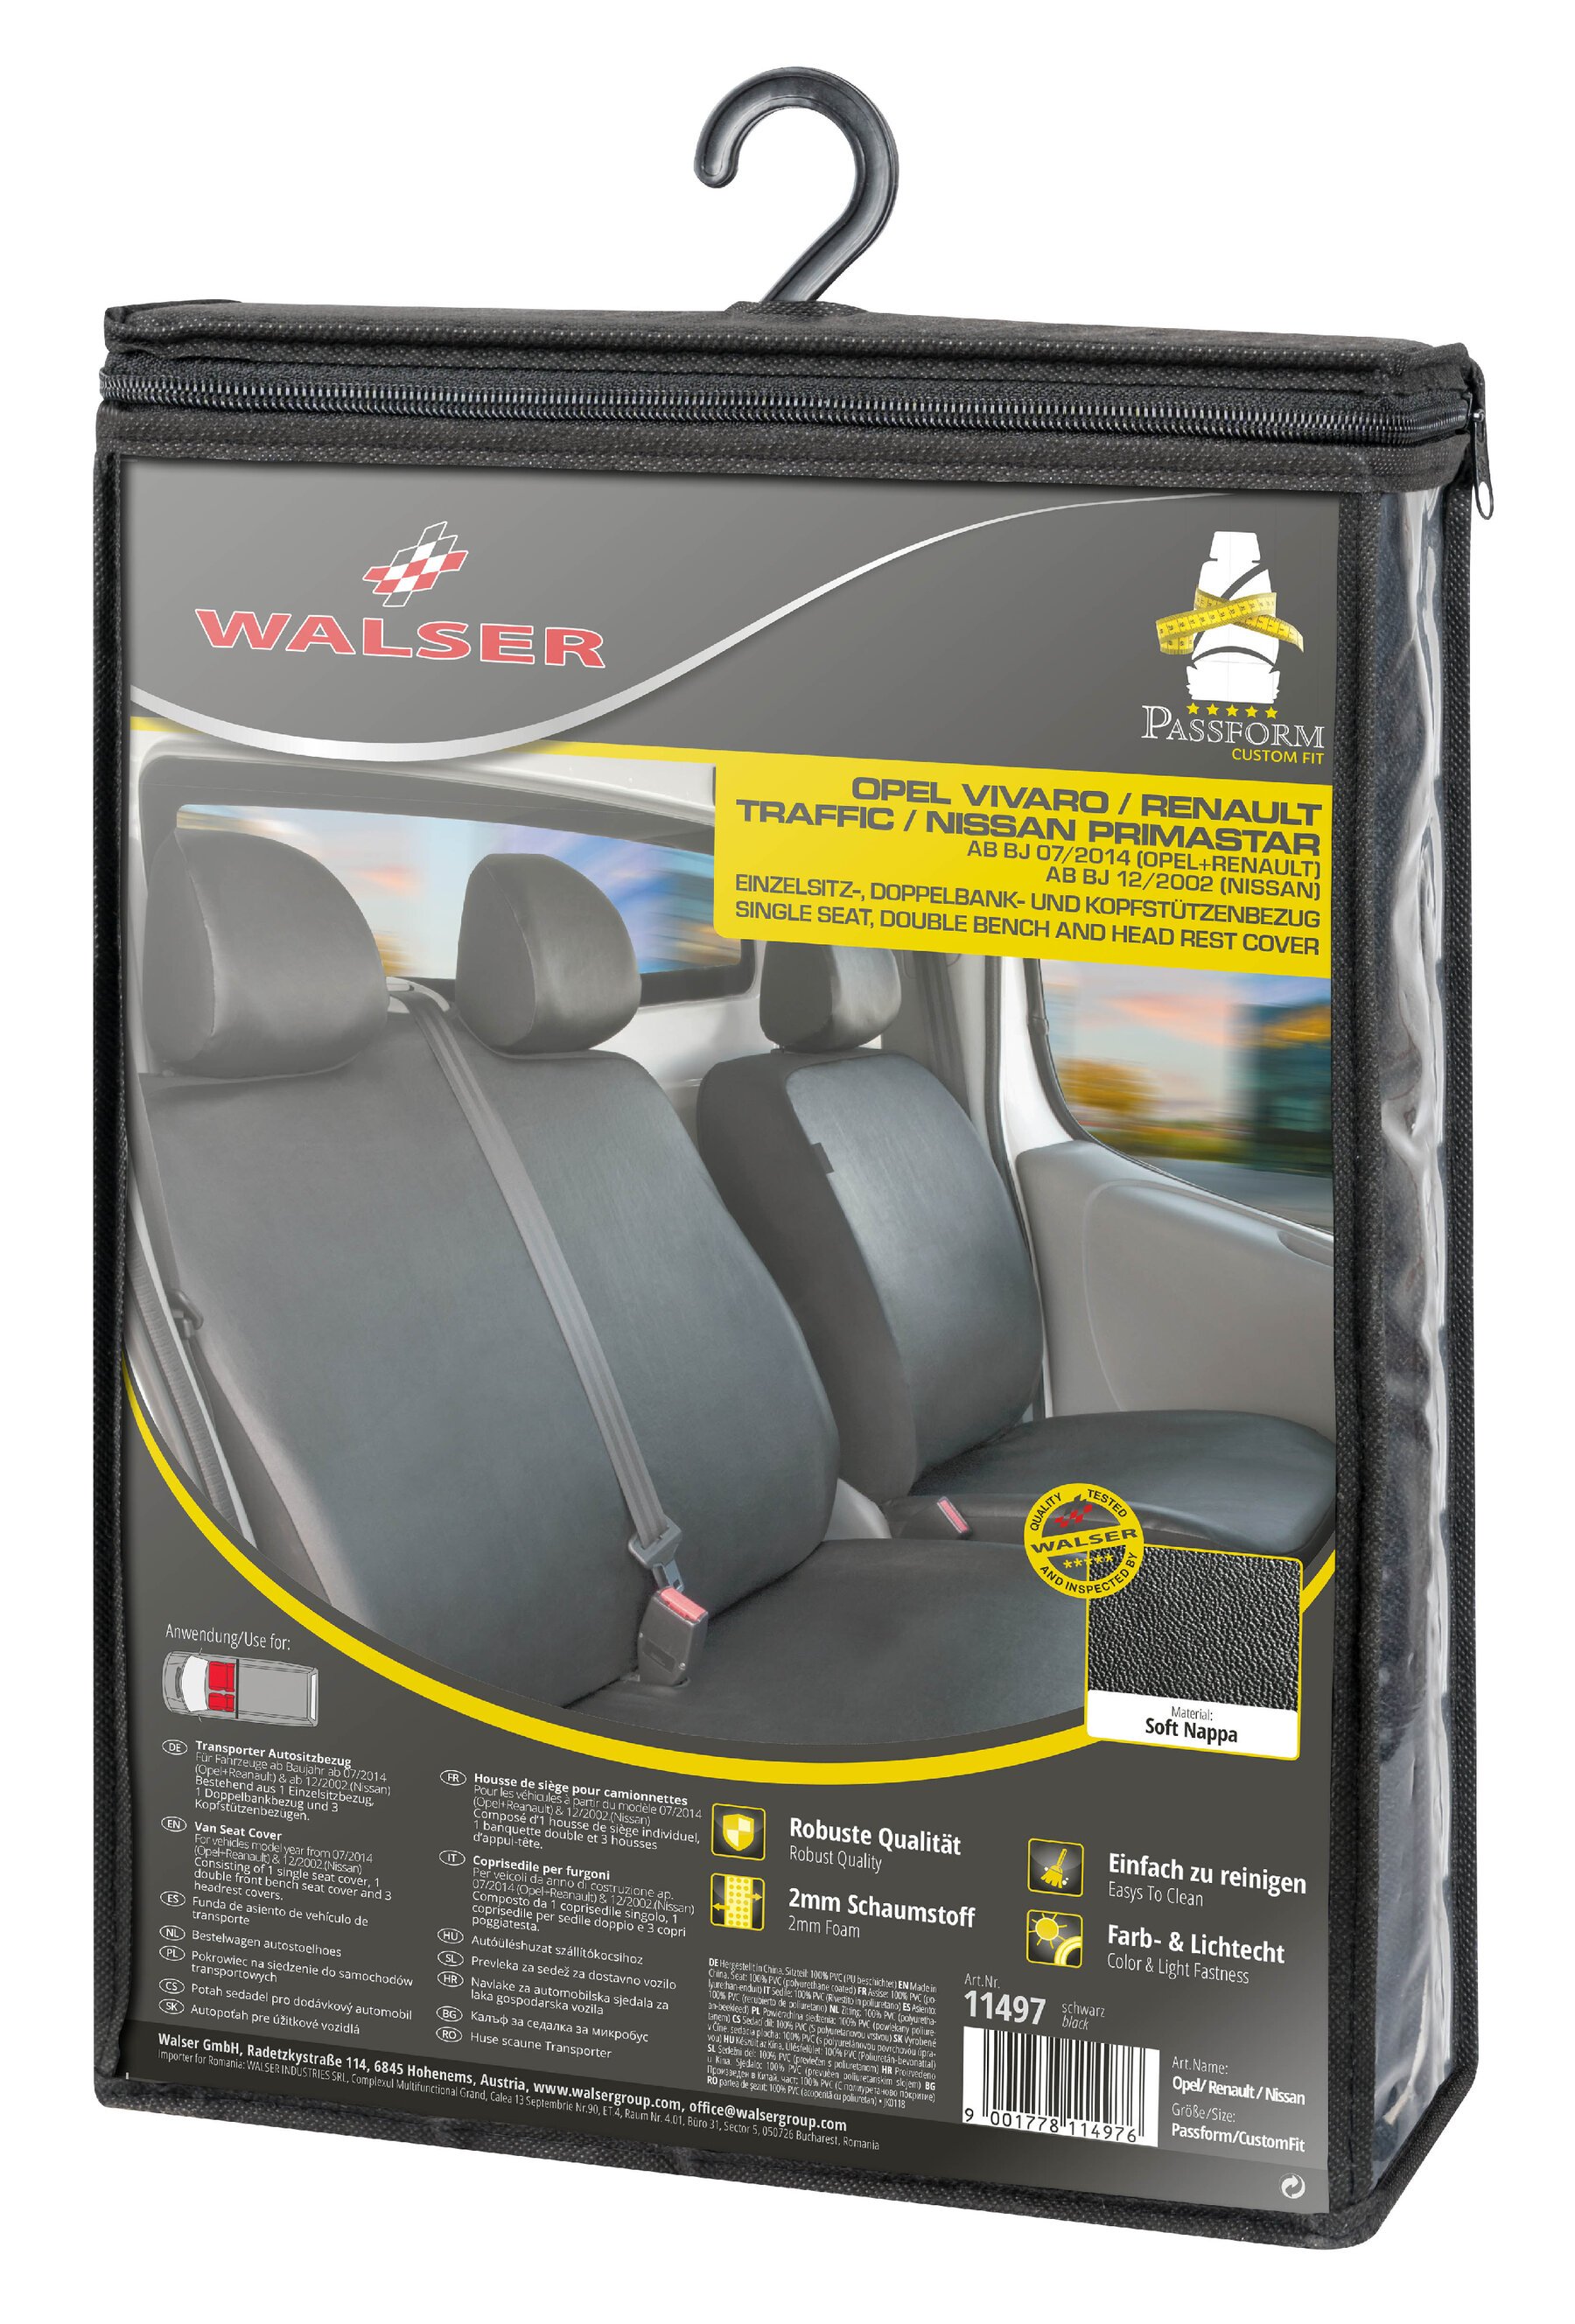 Seat cover made of imitation leather for Renault Trafic II, Opel Vivaro, Nissan Primastar, single seat cover, double seat cover